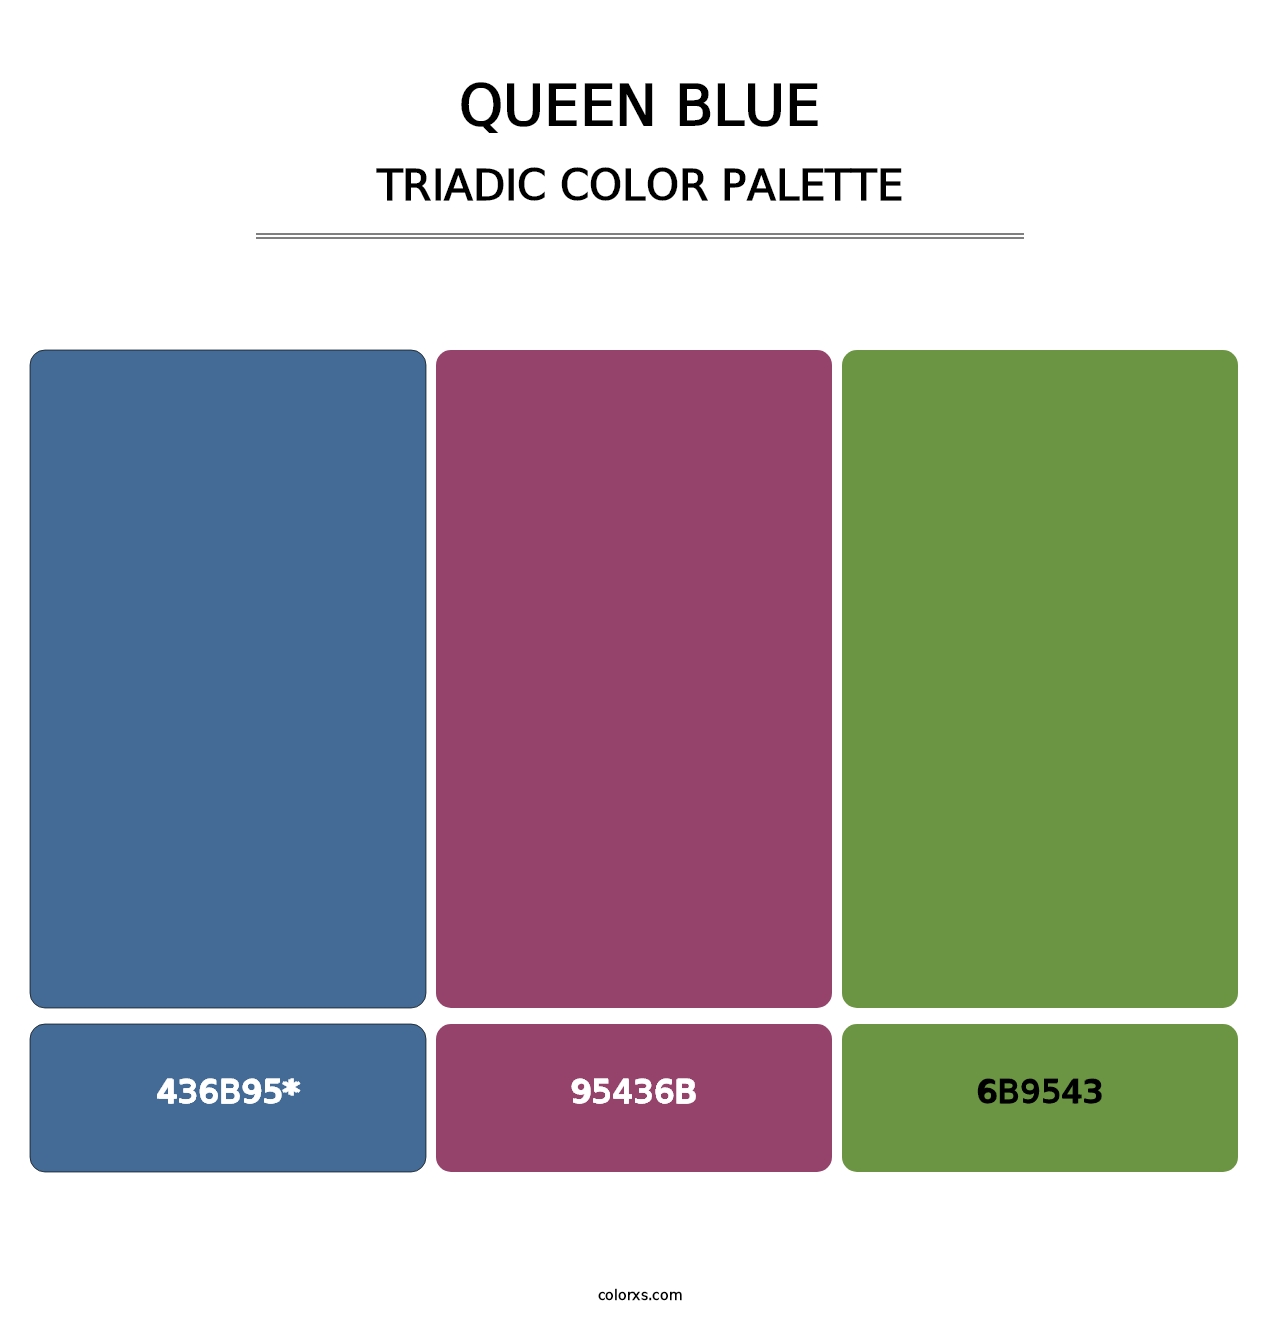 Queen Blue - Triadic Color Palette